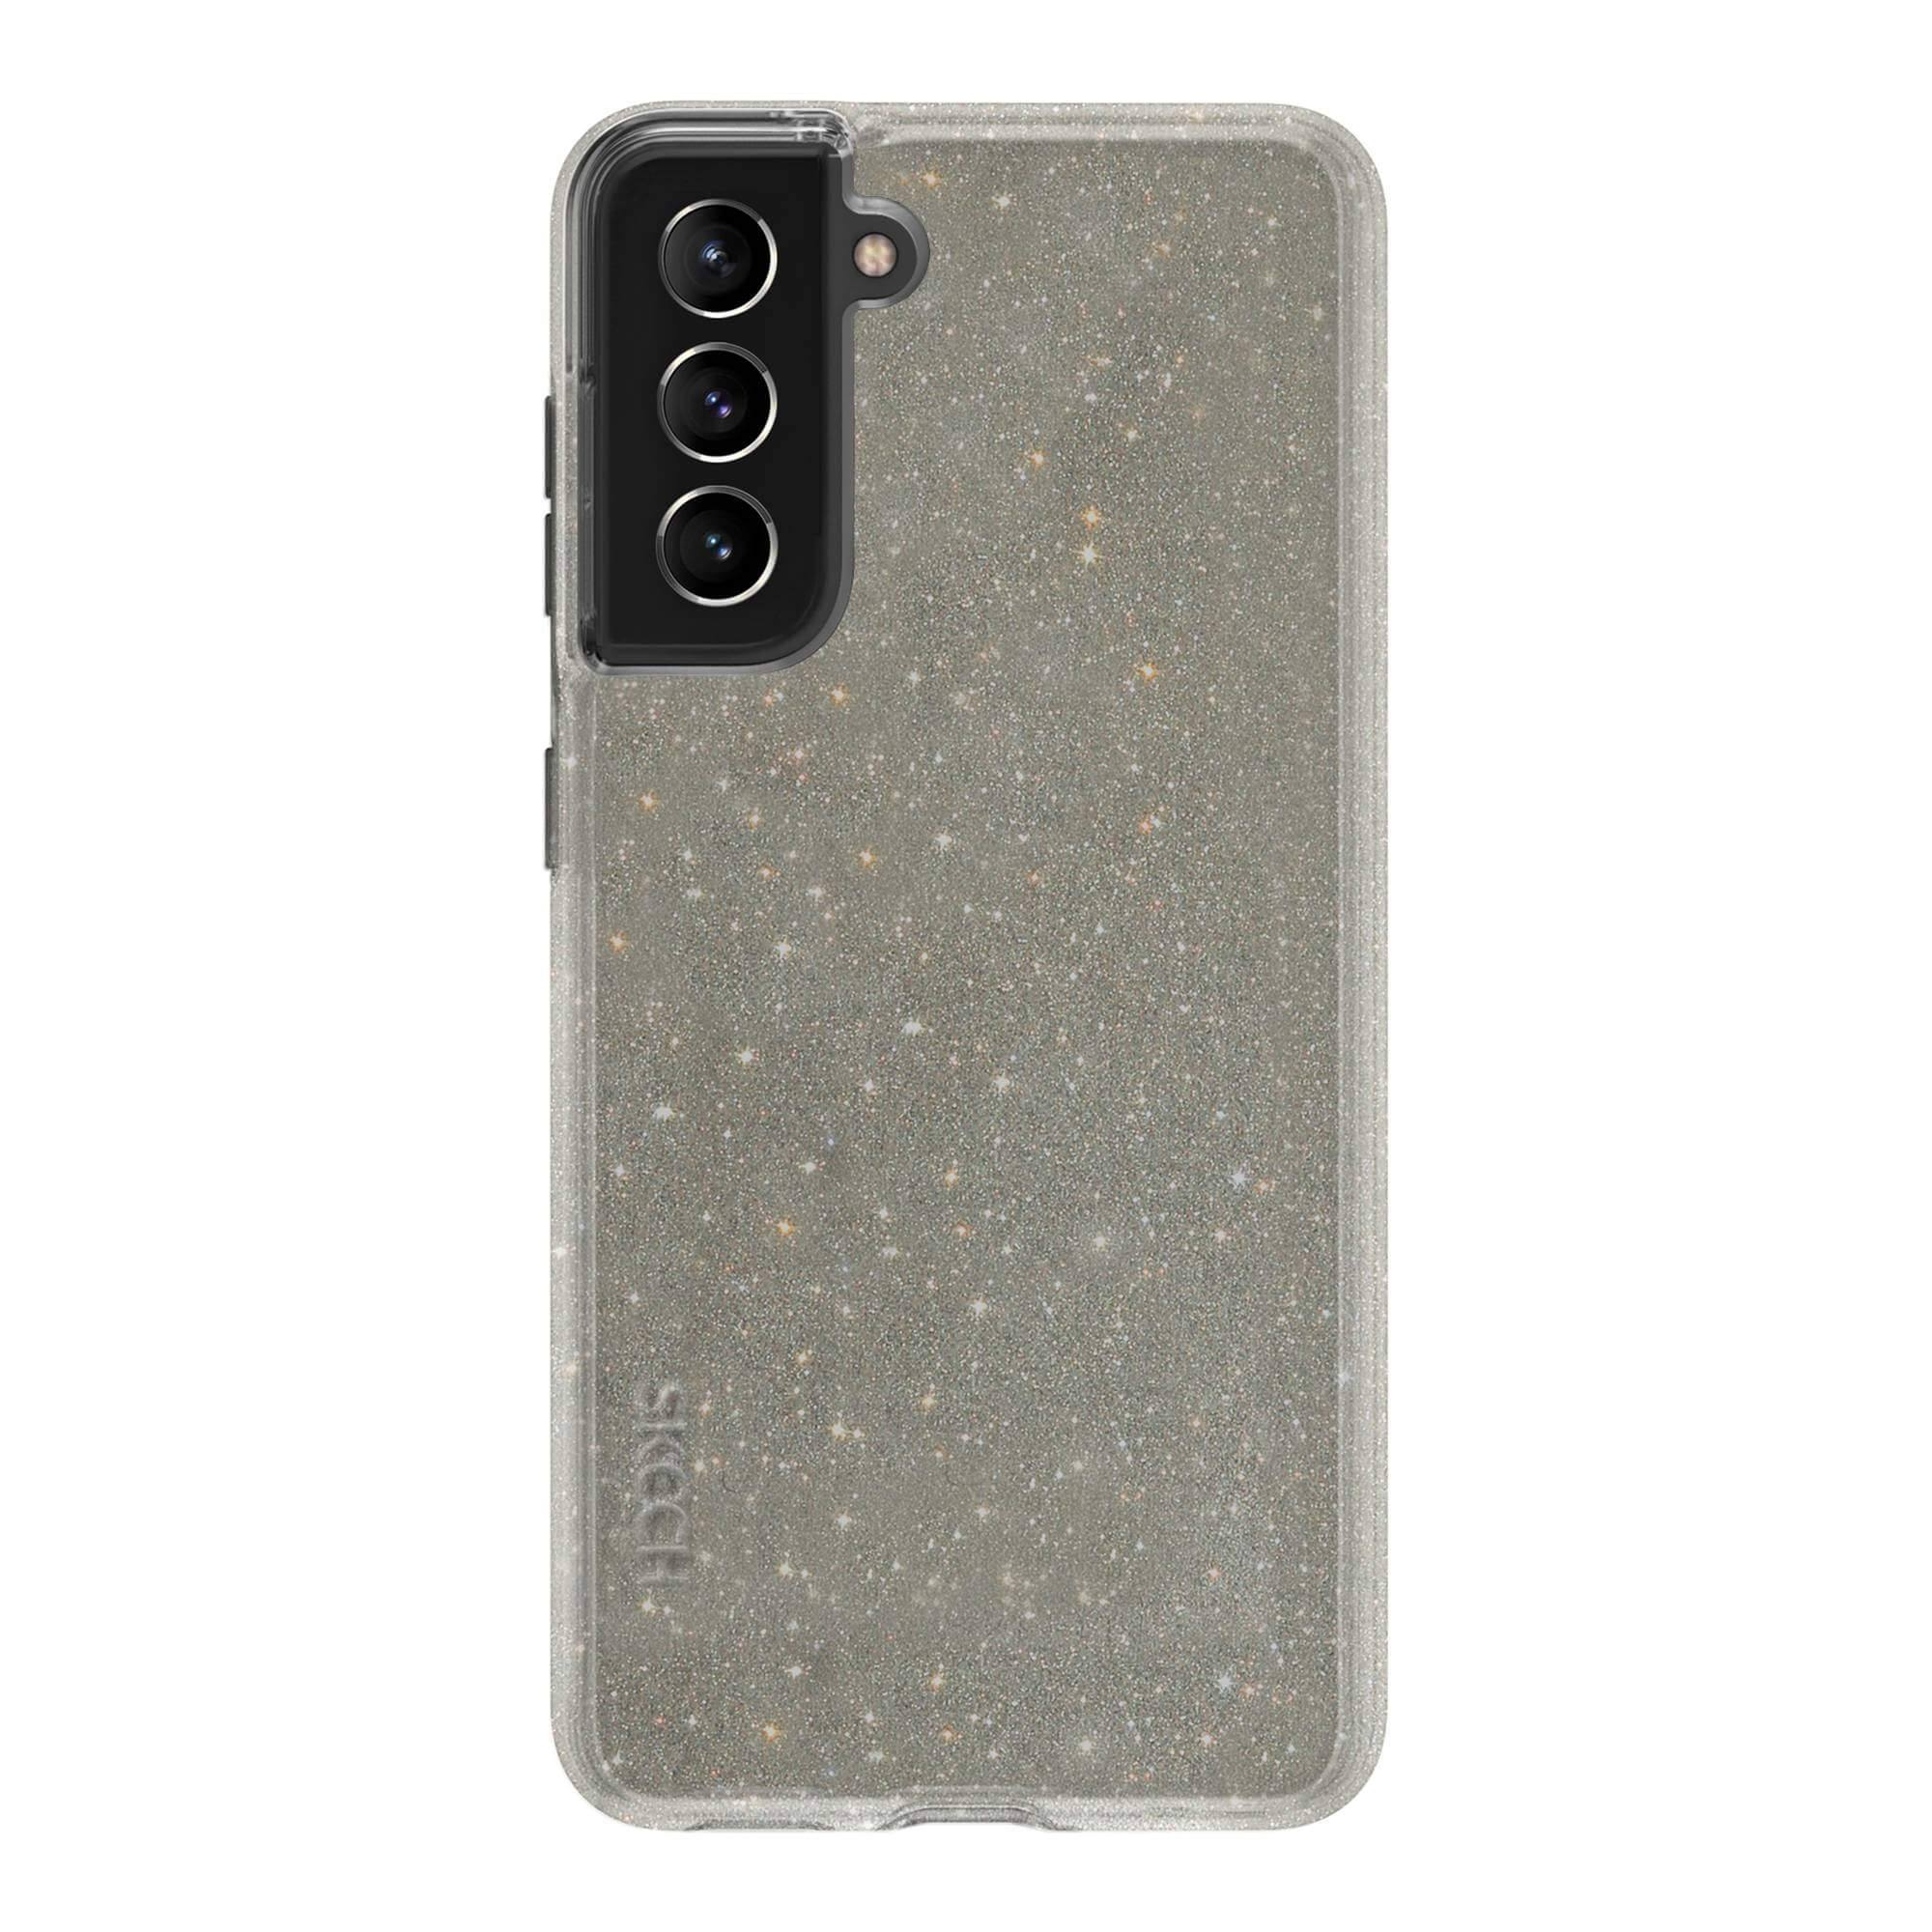 SKECH Sparkle, Backcover, Samsung, snow Galaxy S22+ - transparent 5G, spark